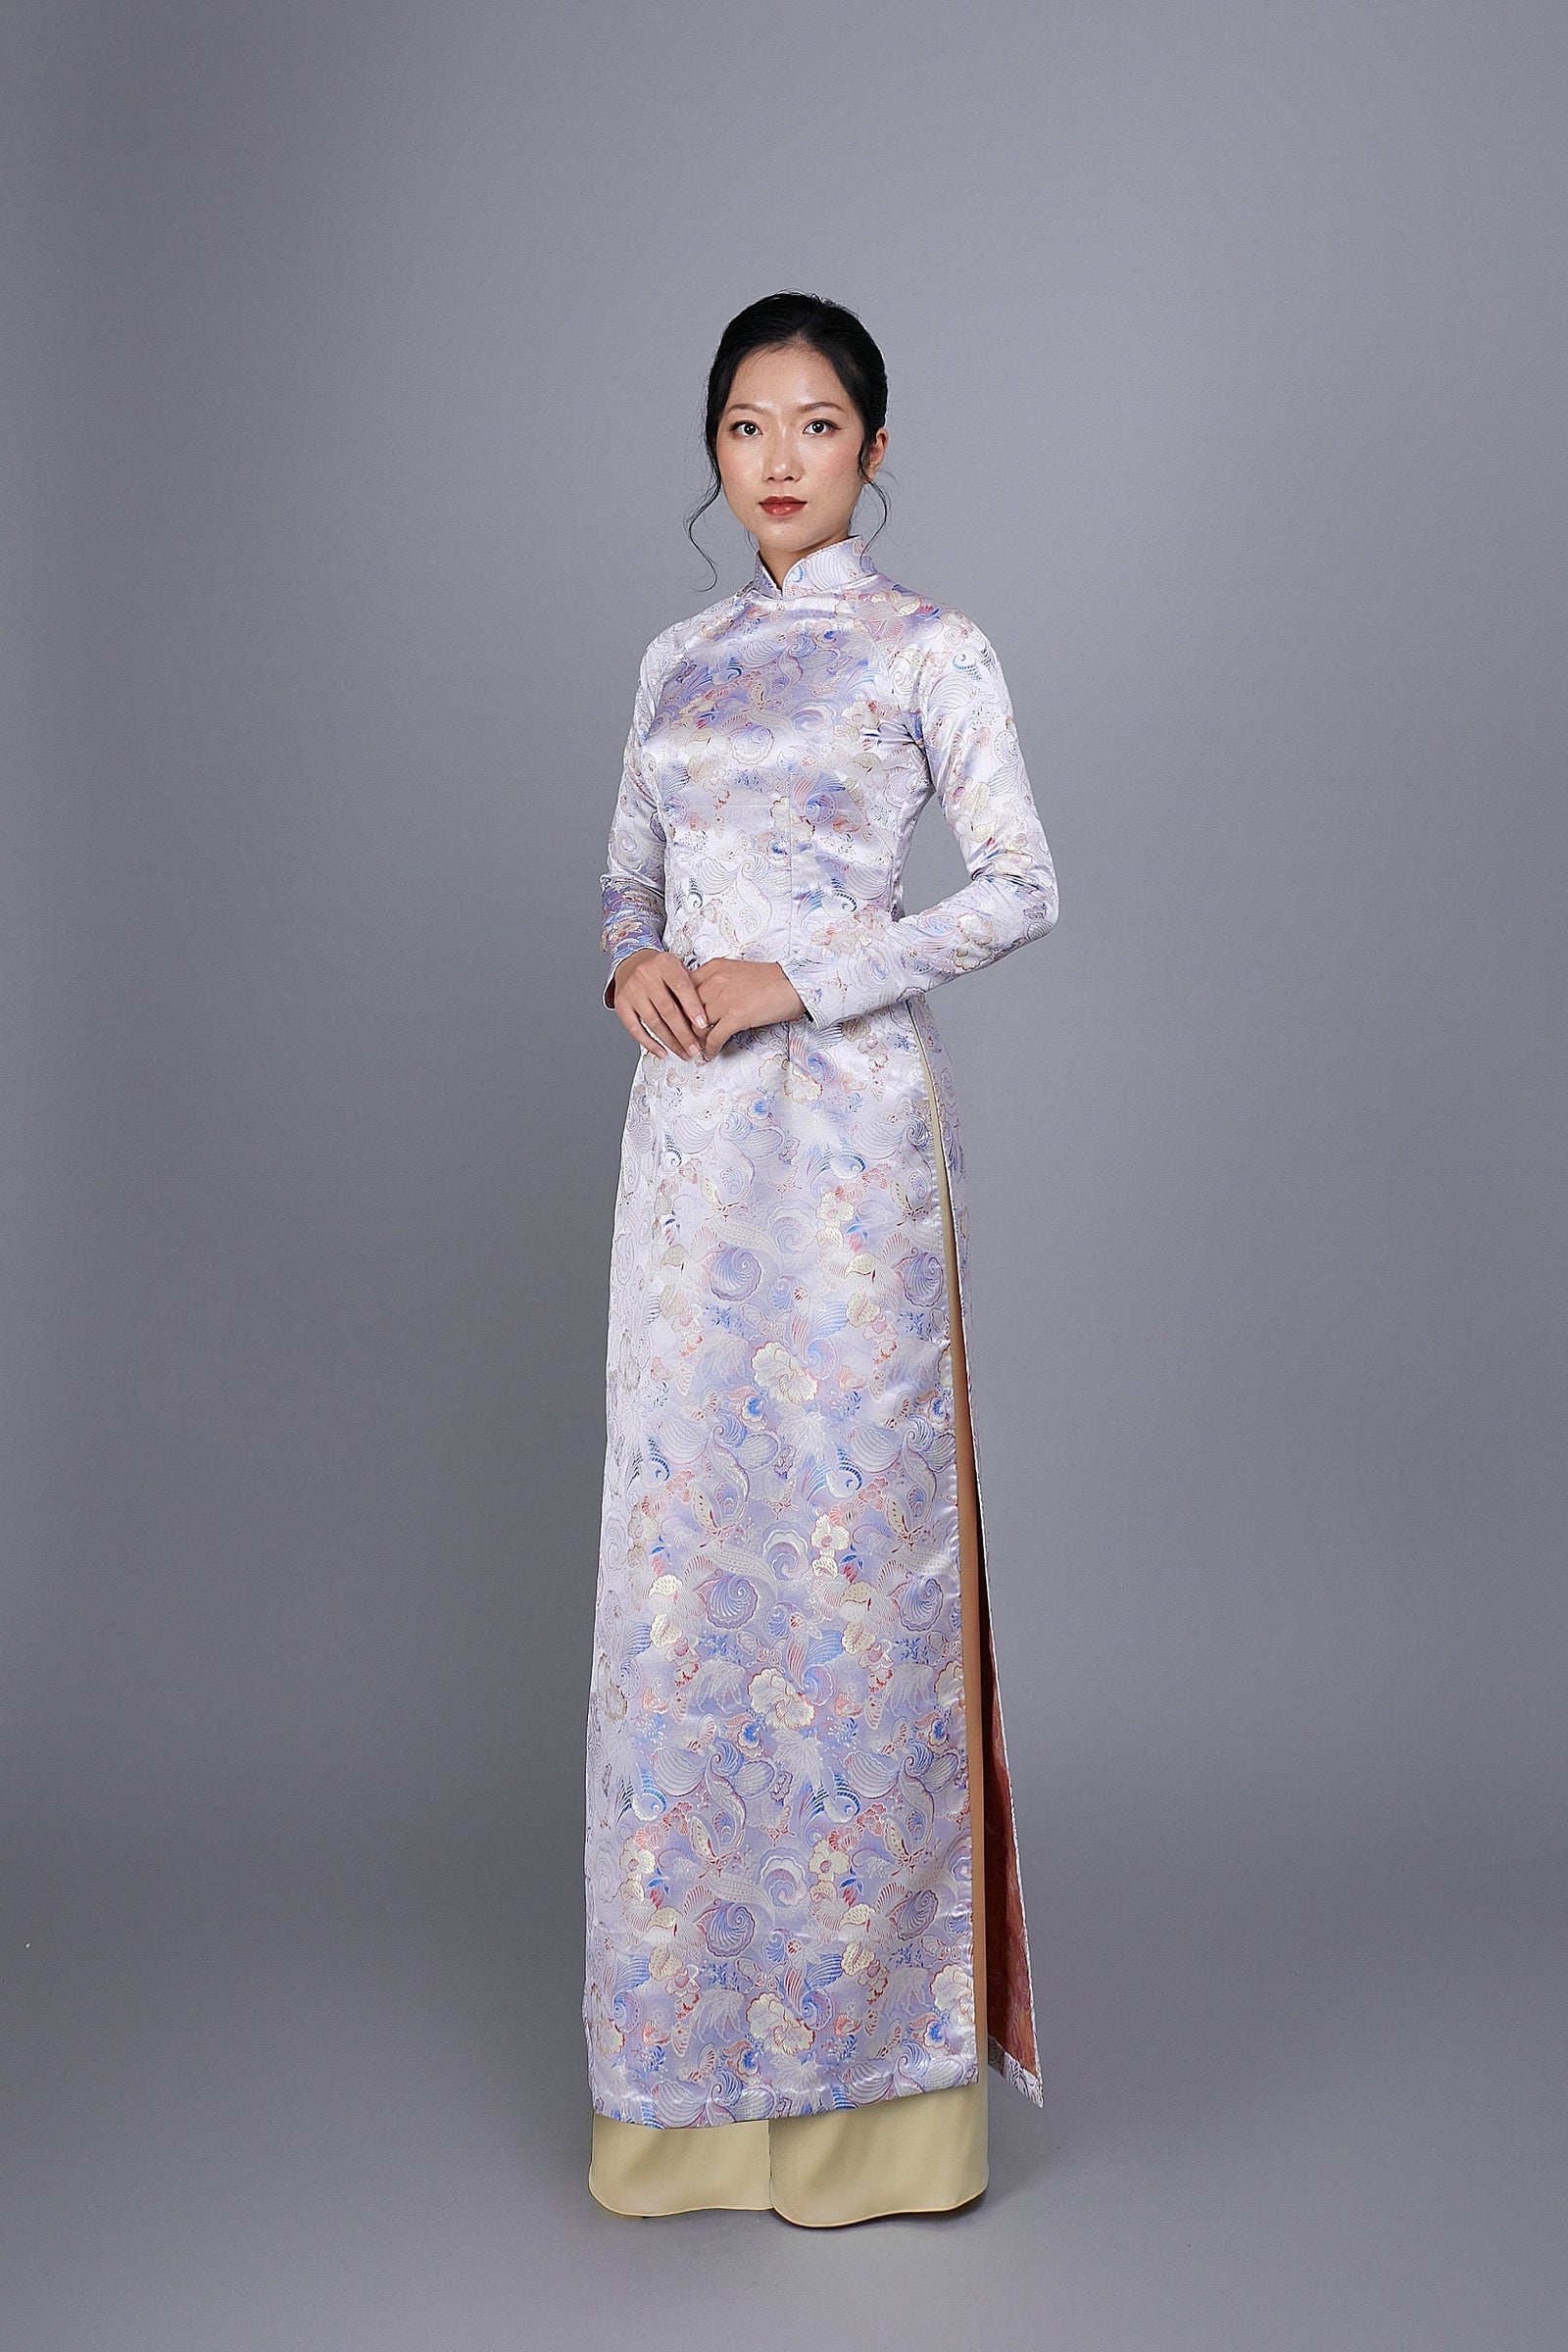 2020 Aodai Vietnam Clothing Cheongsam Qipao Chinese Dress Vietnamese  Traditional Dress Elegant Modern Women Traditional Aodai